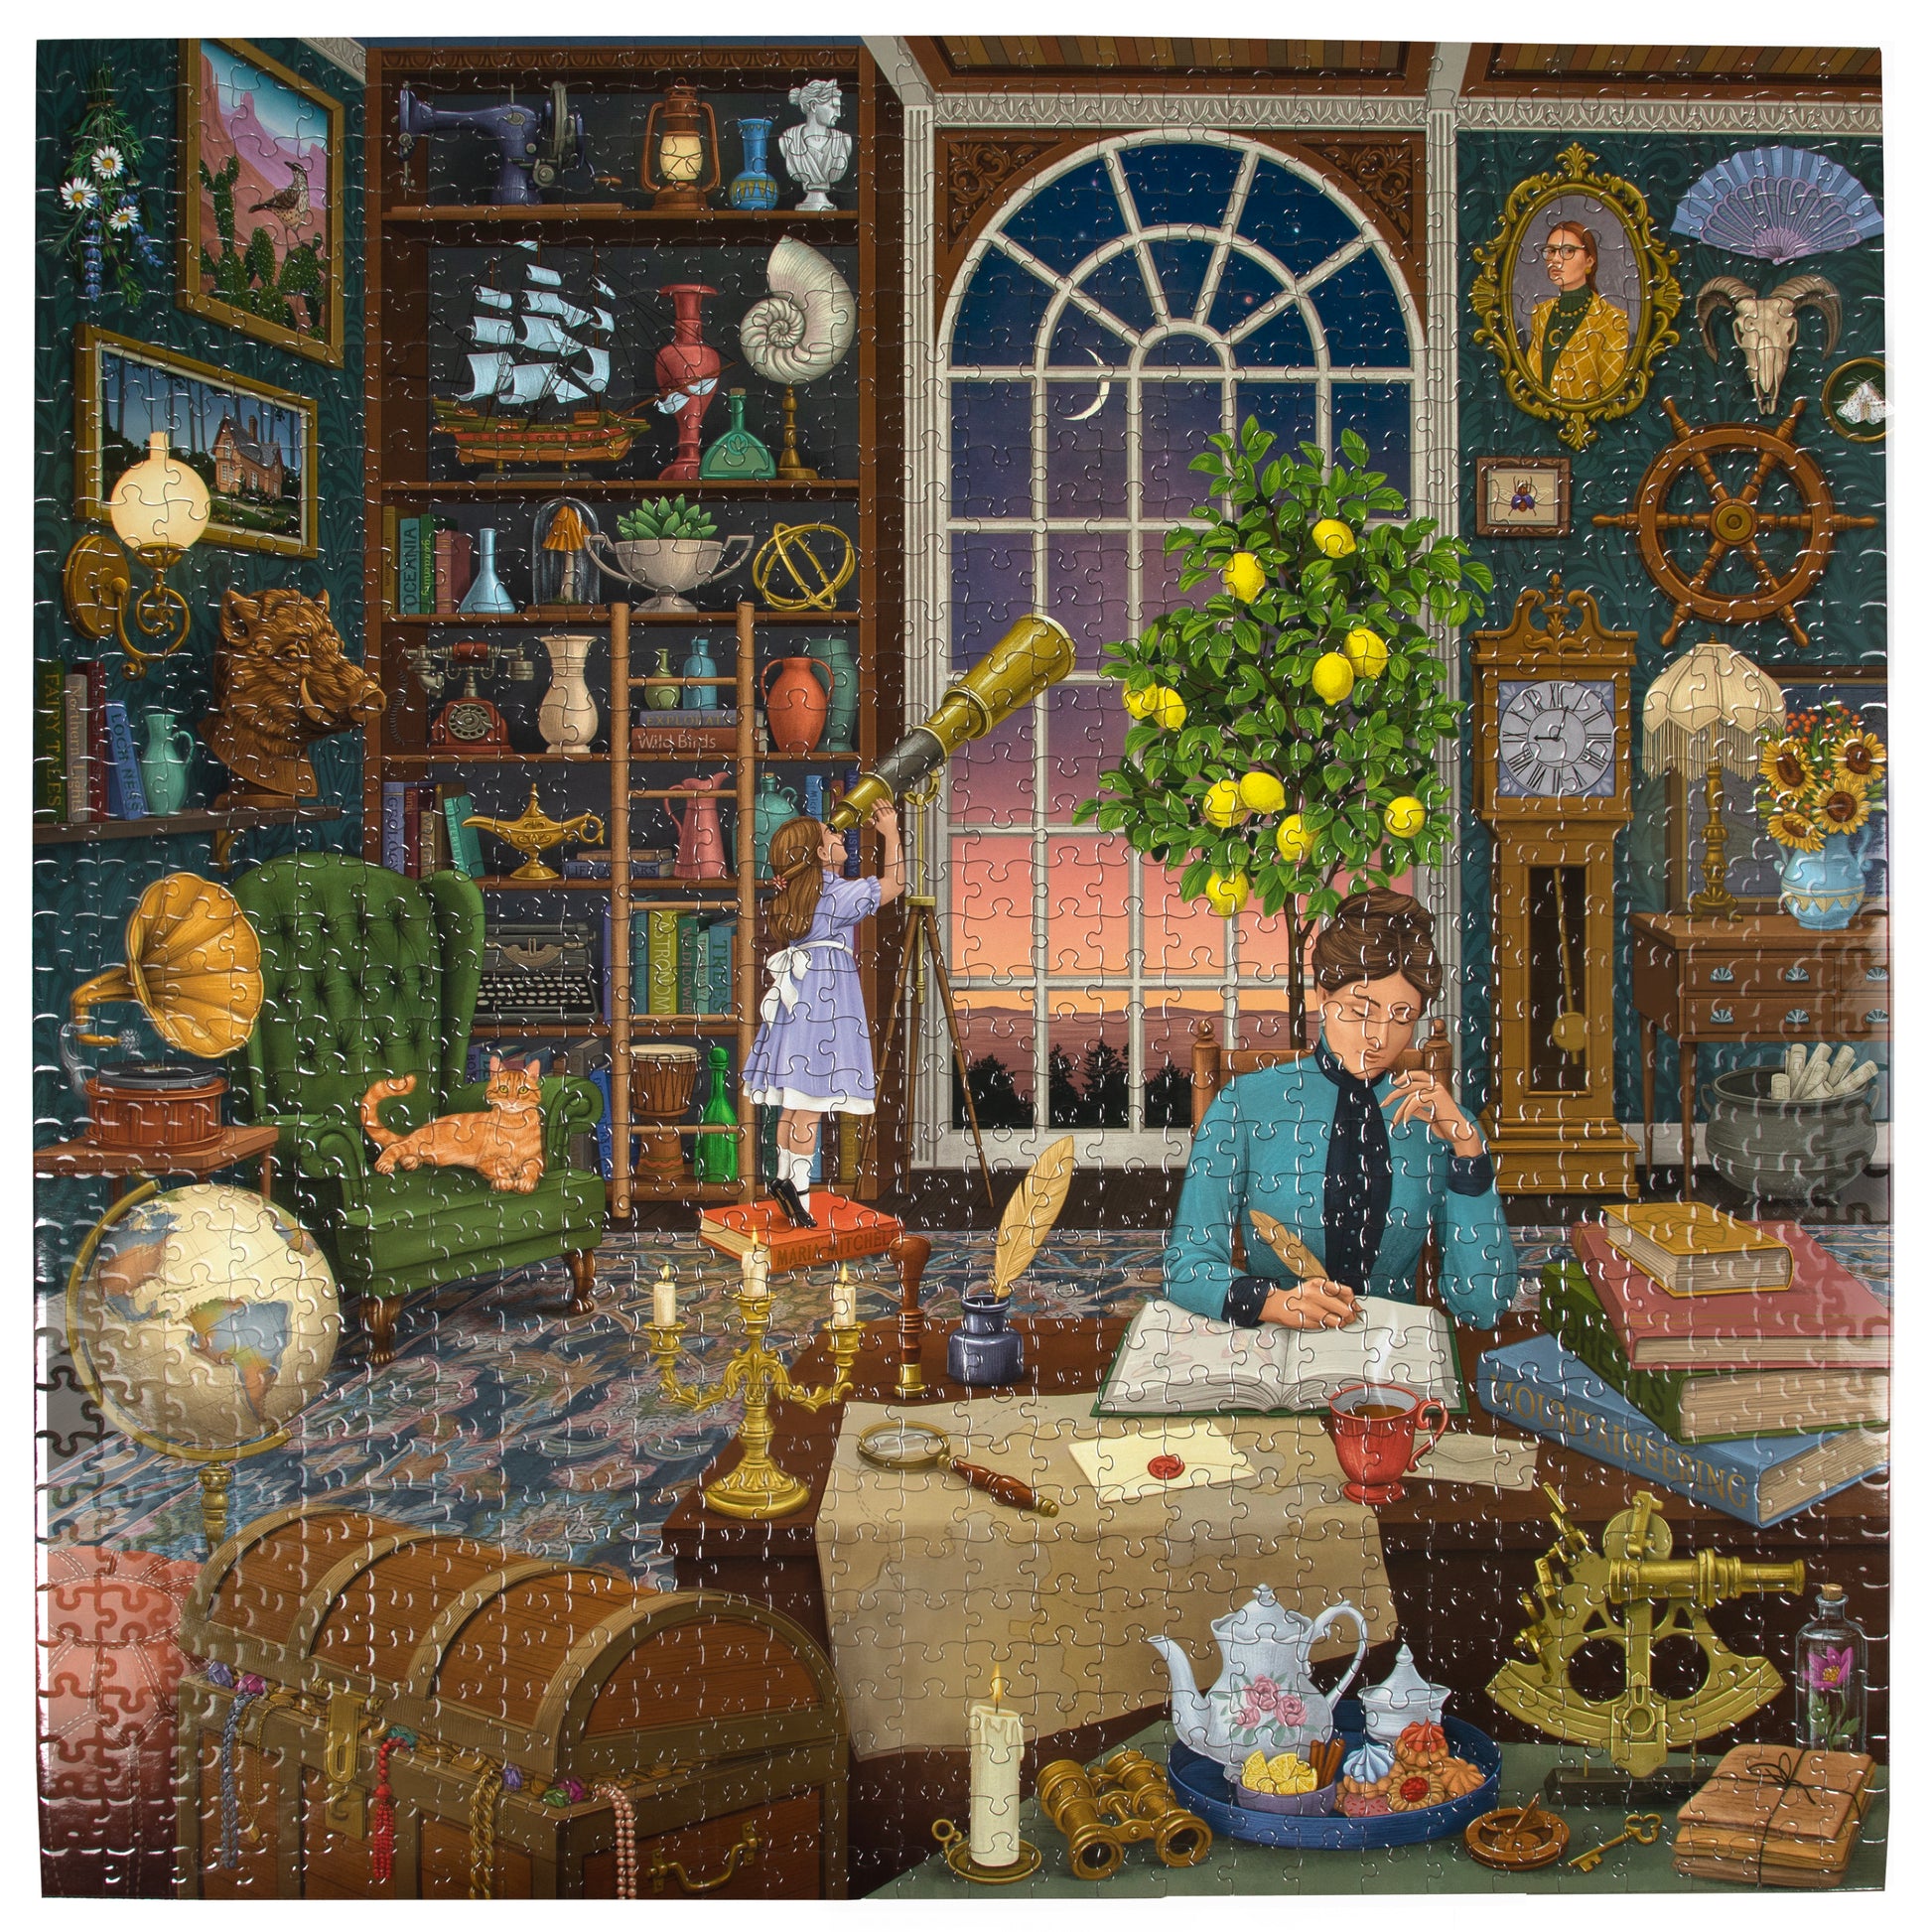 Puzzle A Lost Stitch, 1 000 pieces